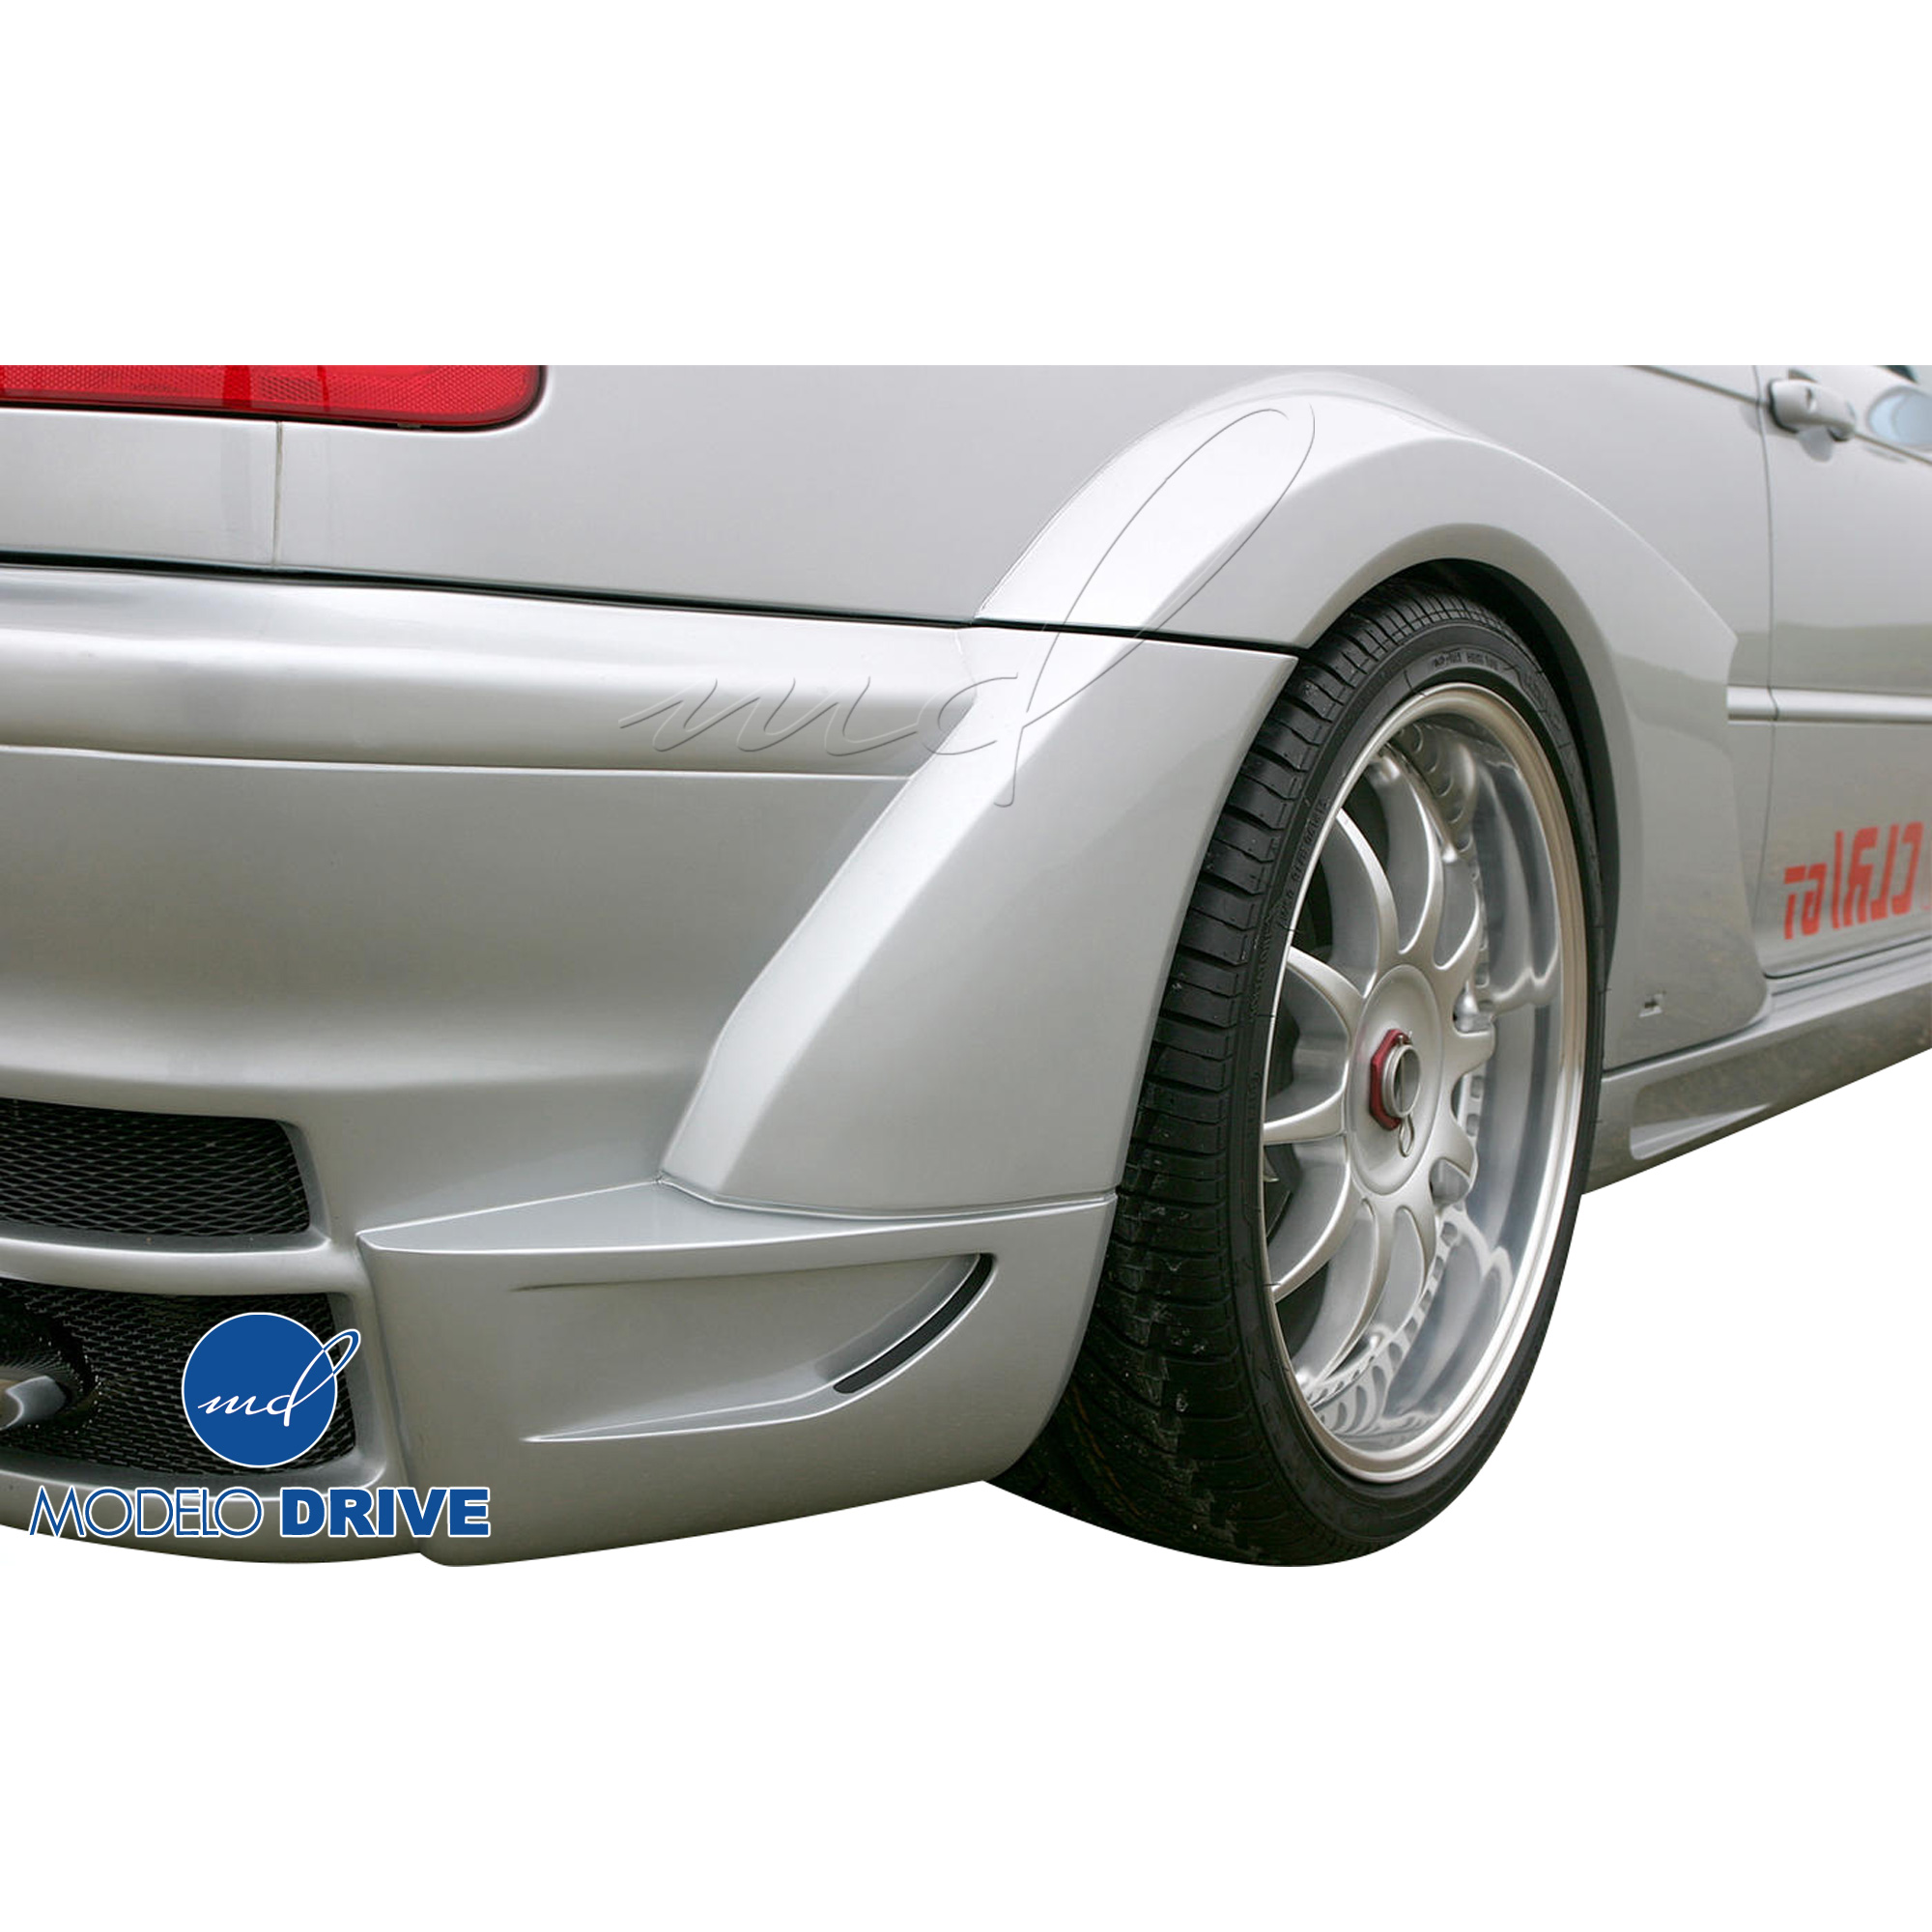 ModeloDrive FRP LDES Wide Body Rear Bumper > BMW 3-Series E46 1999-2005 > 2dr - Image 3